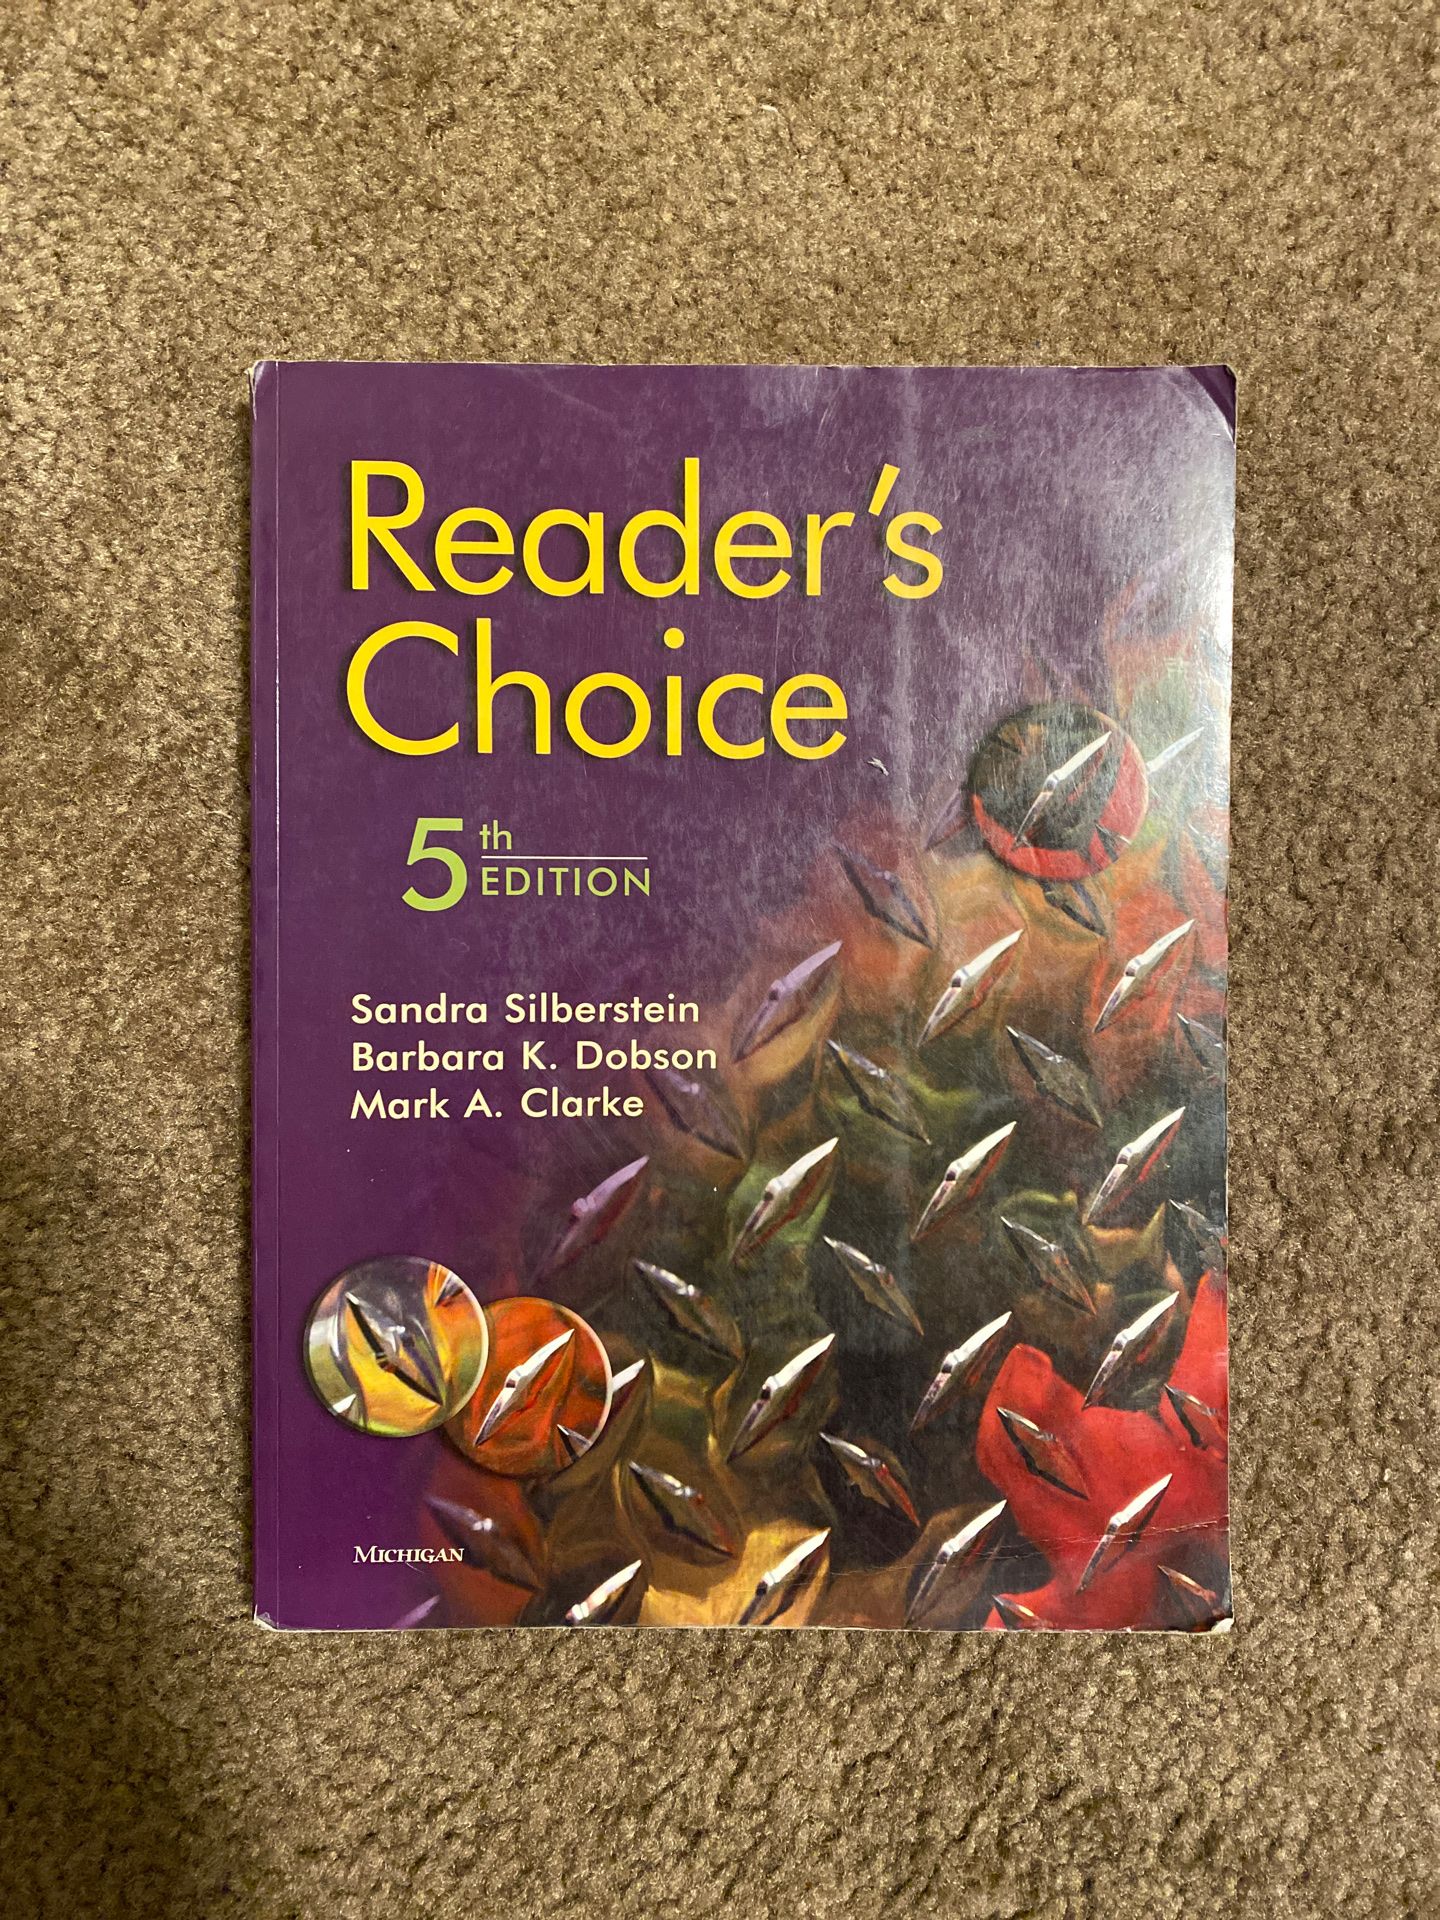 Reader’s choice 5th edition